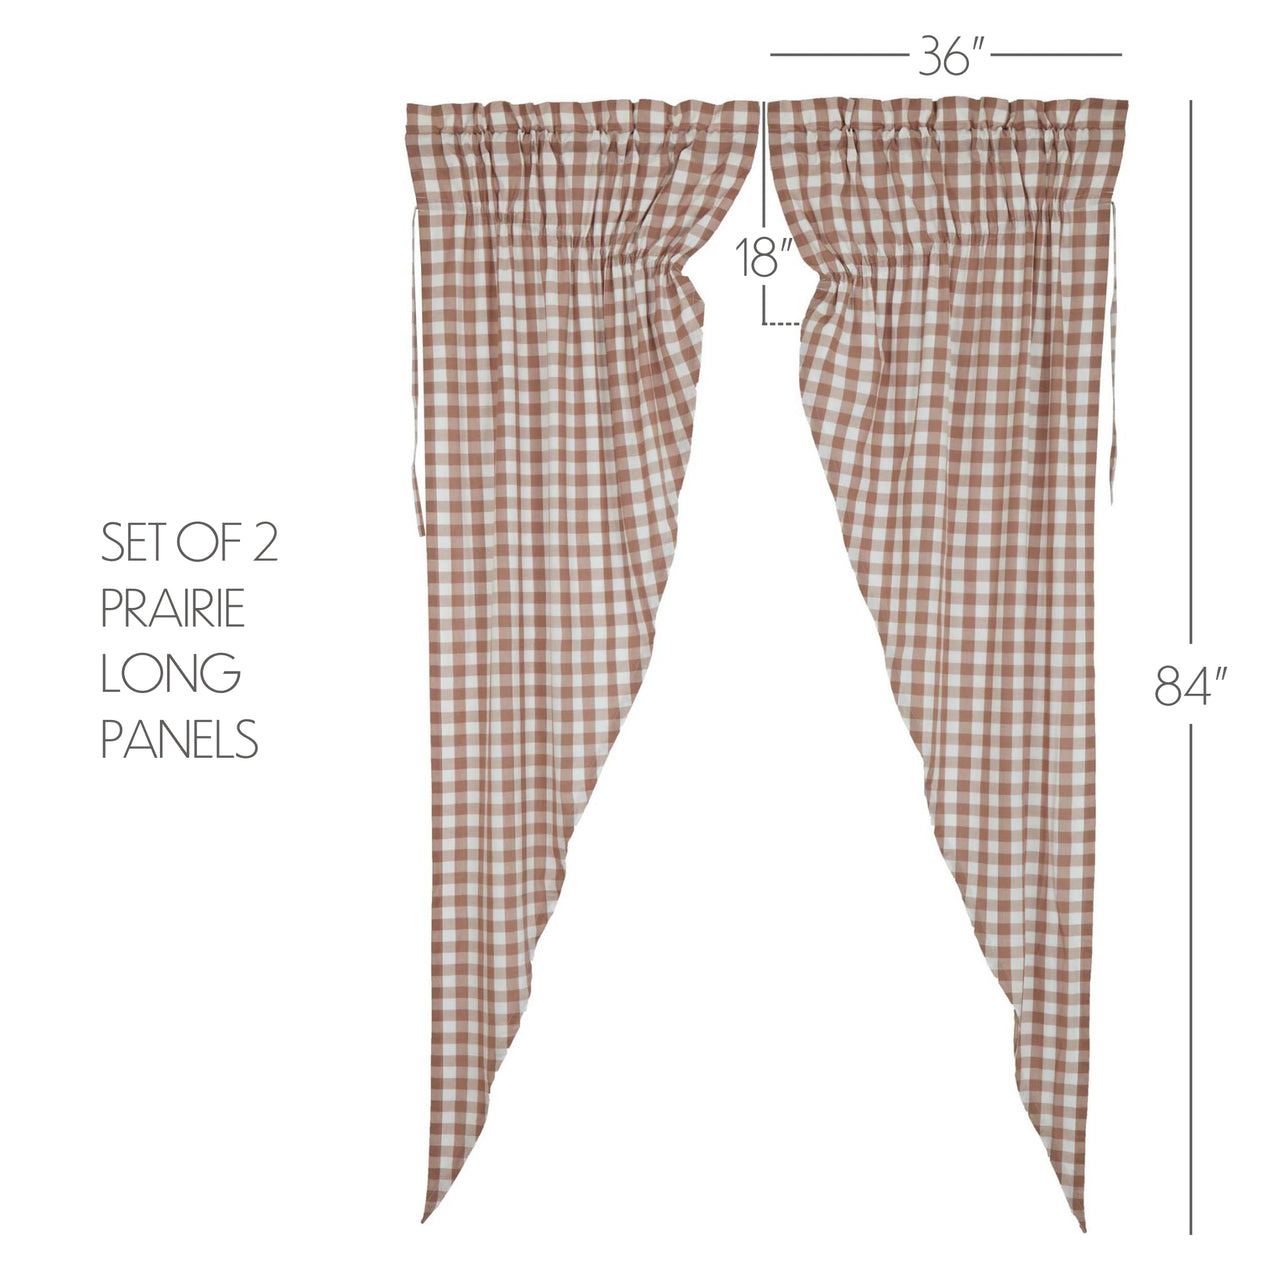 Annie Buffalo Portabella Check Prairie Long Panel Set of 2 84x36x18 VHC Brands